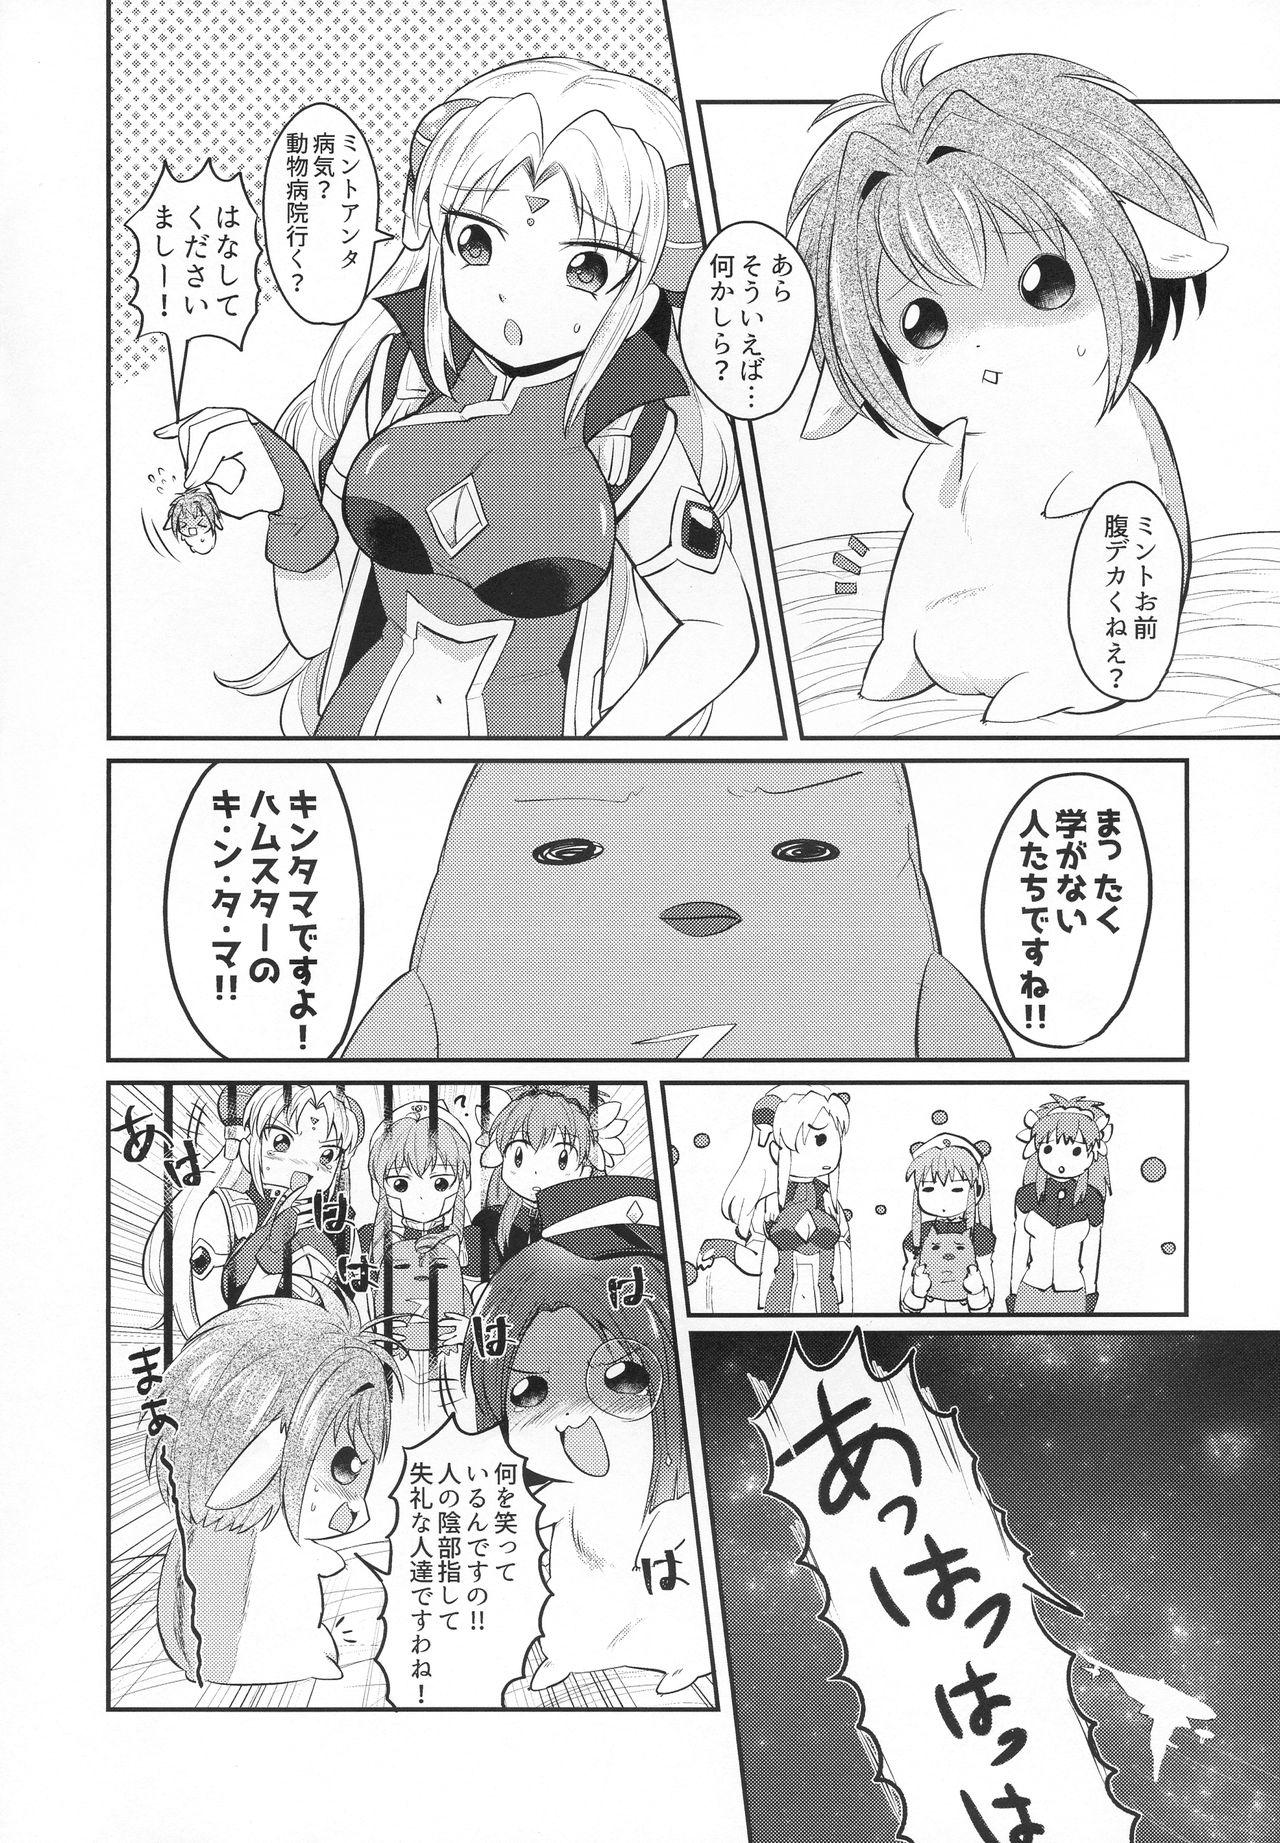 Boobies Forte-san!! Sukida 〜〜〜!!! - Galaxy angel Culos - Page 6